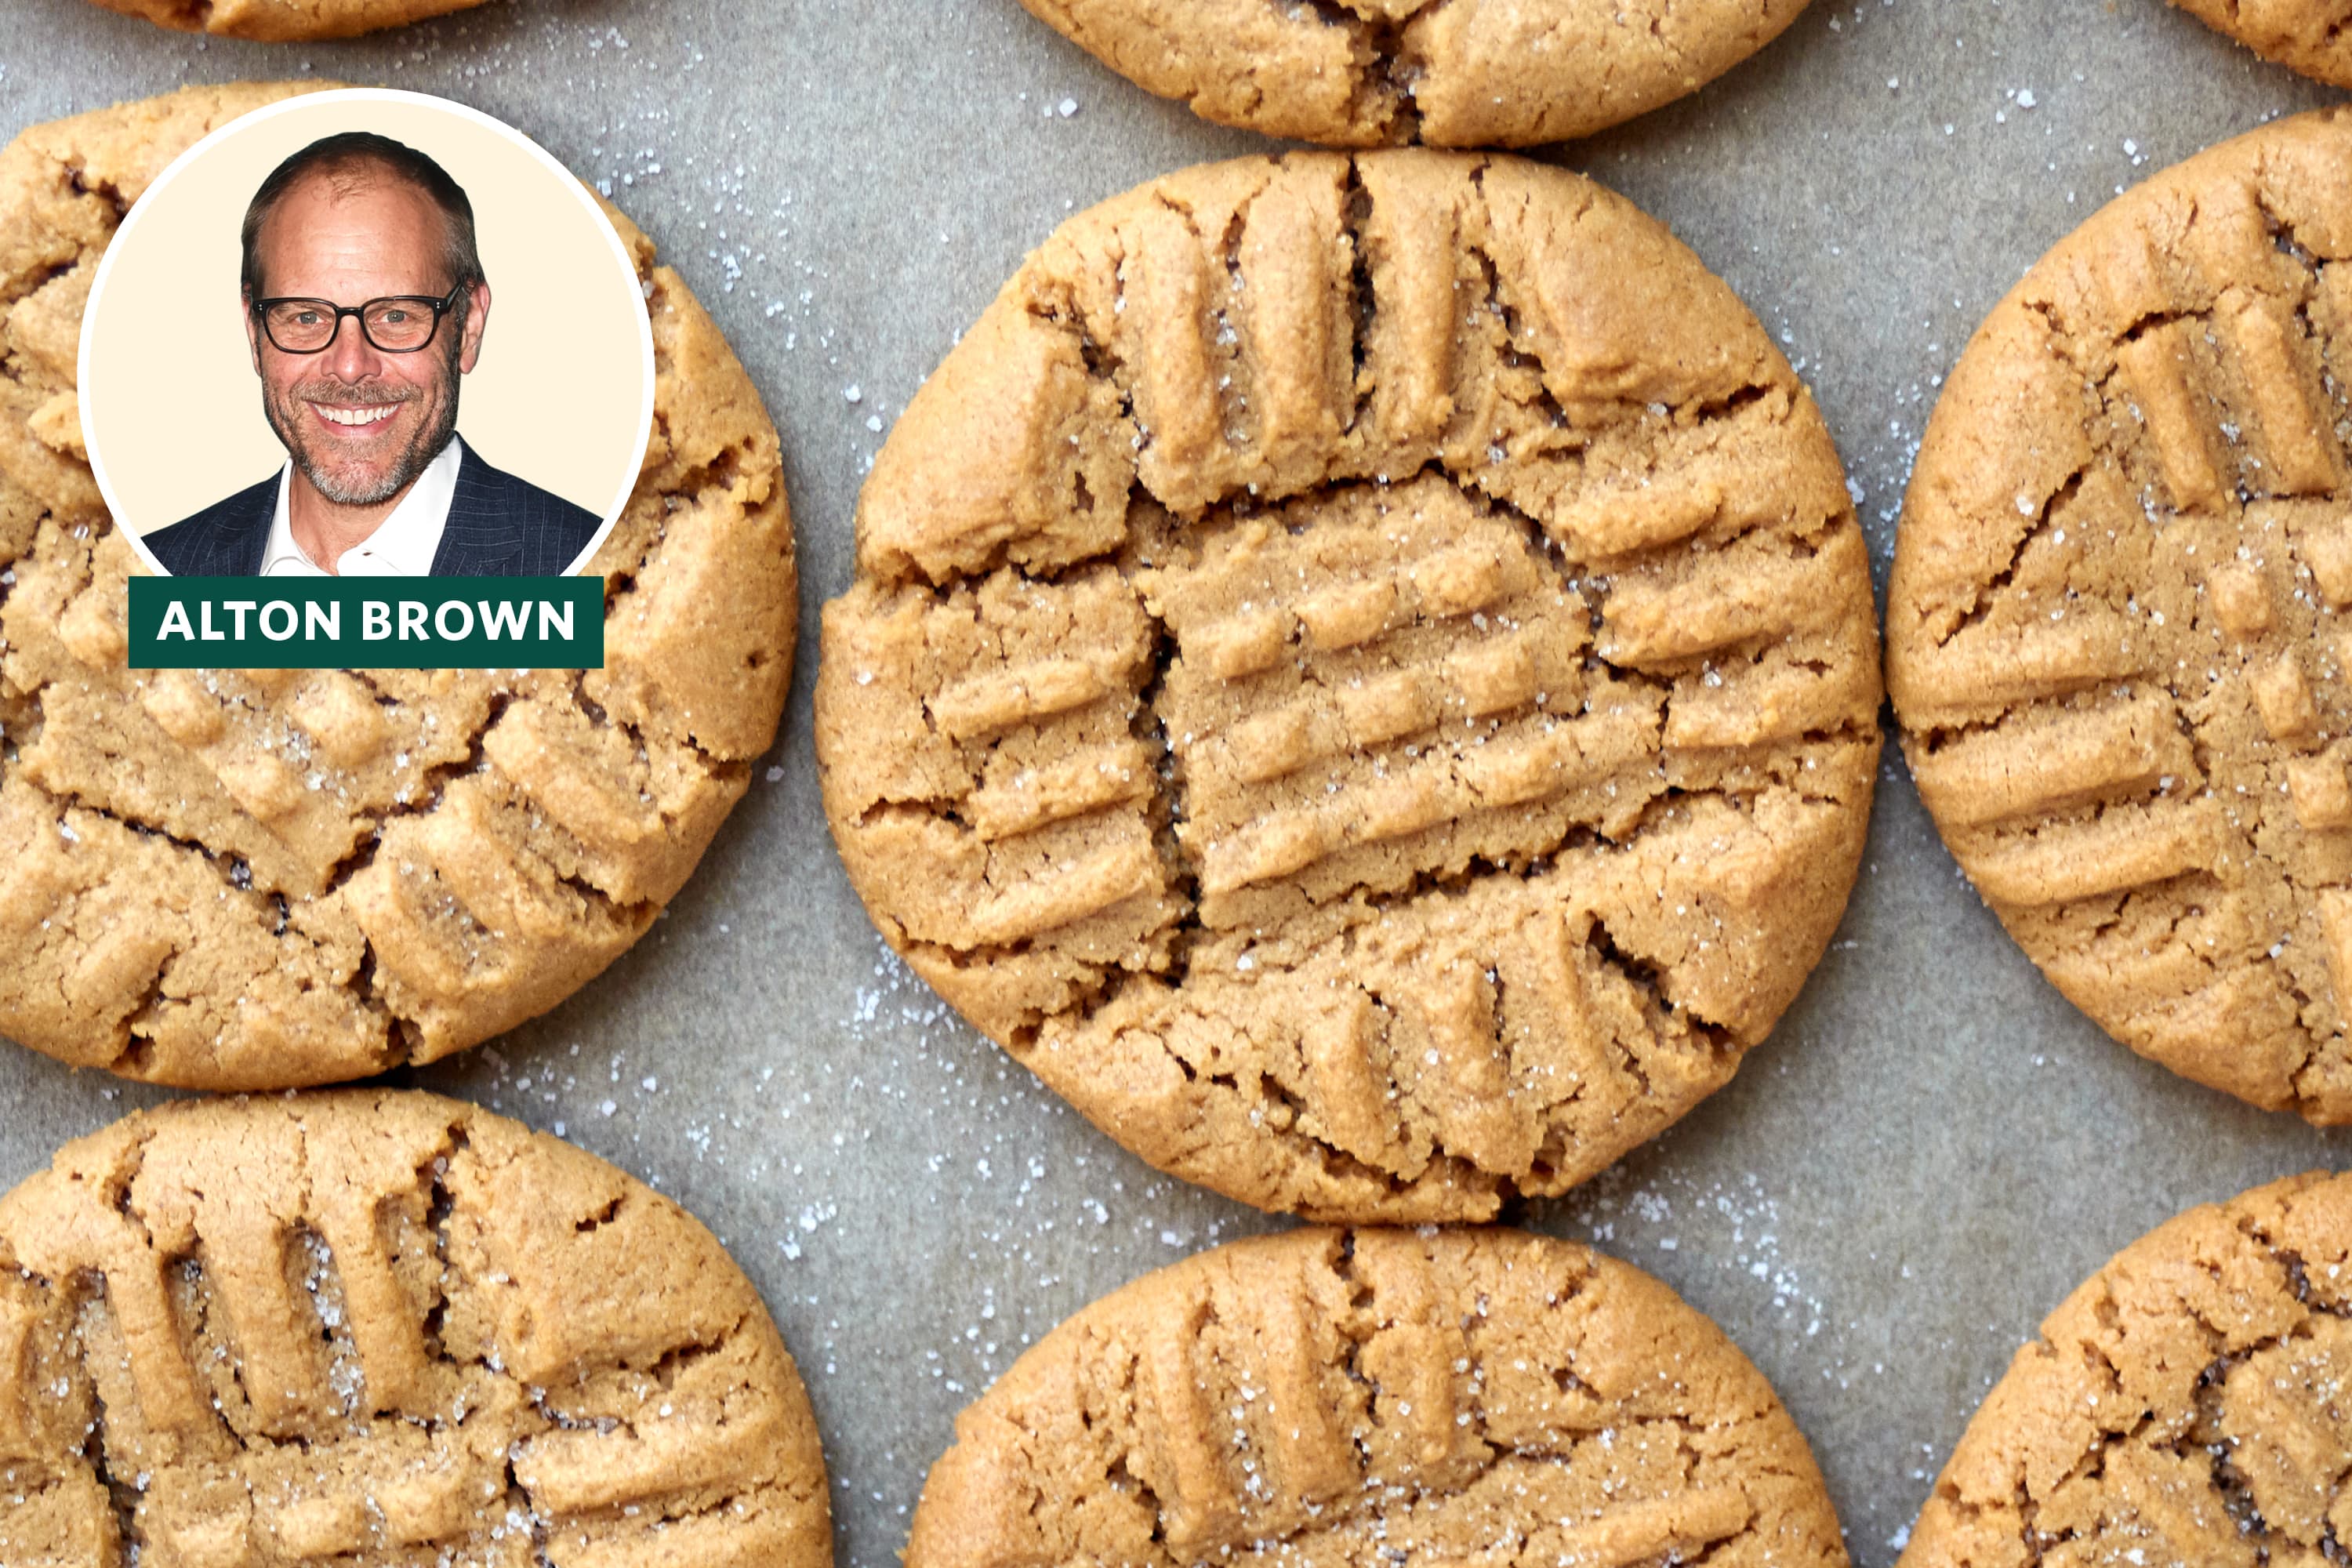 https://cdn.apartmenttherapy.info/image/upload/v1589293109/k/Photo/Series/2020-05-Showdown-Peanut-Butter-Cookies/Peanut-Butter-Cookie-Battle-Graphics/peanut-butter-cookies-alton.jpg